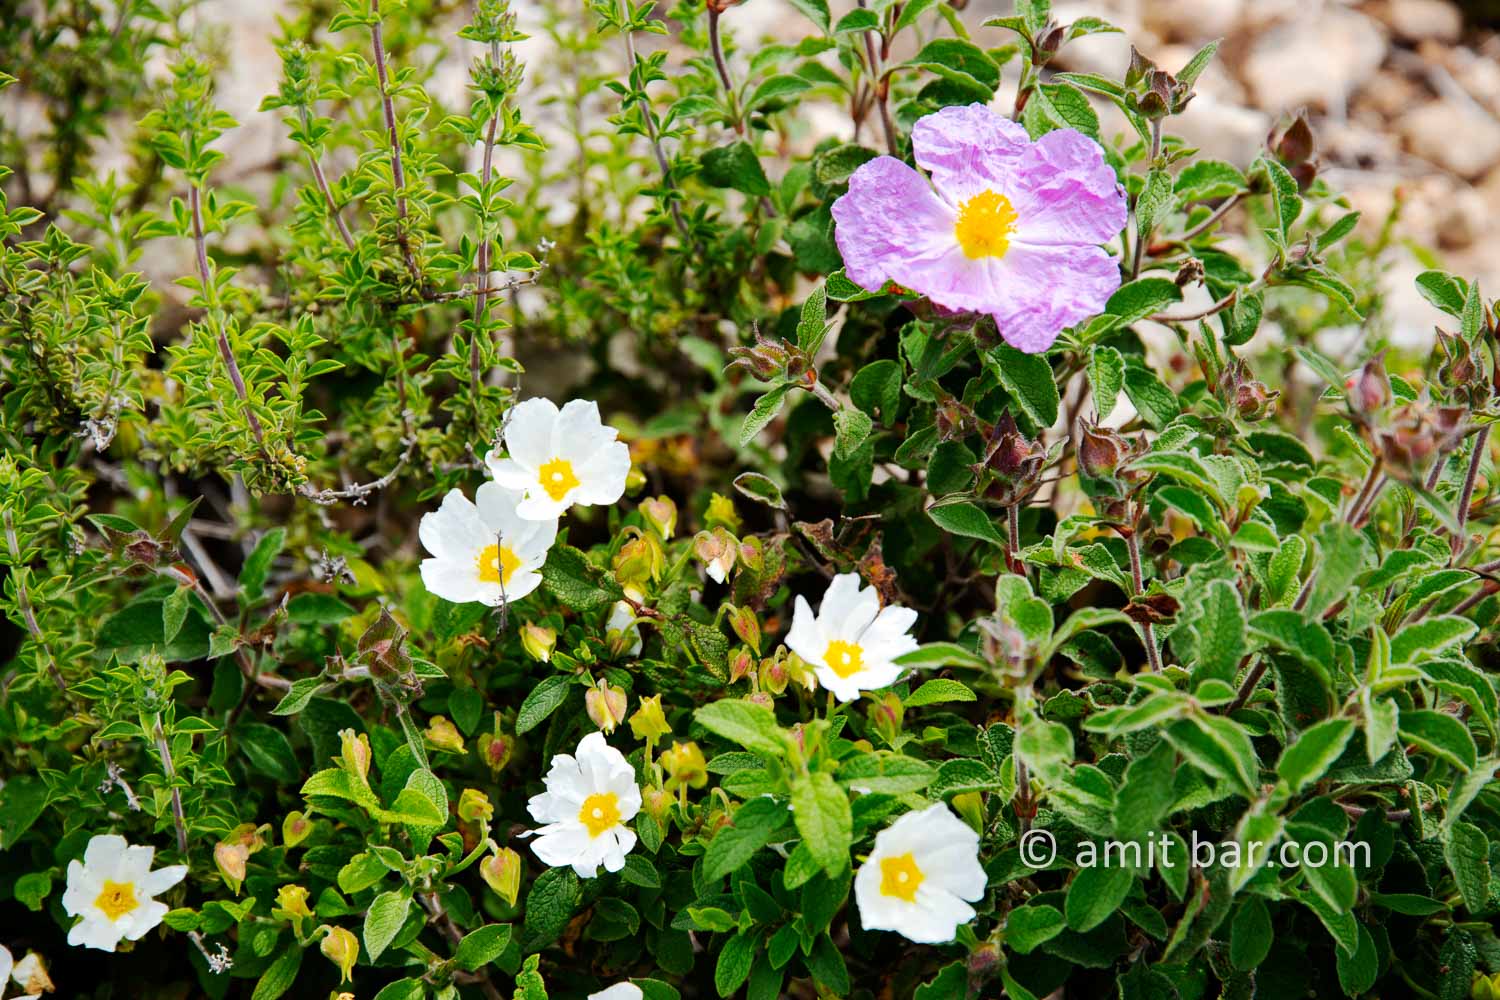 Carmel wild flowers I: wild flowers on mountain Carmel, Israel in the spring time